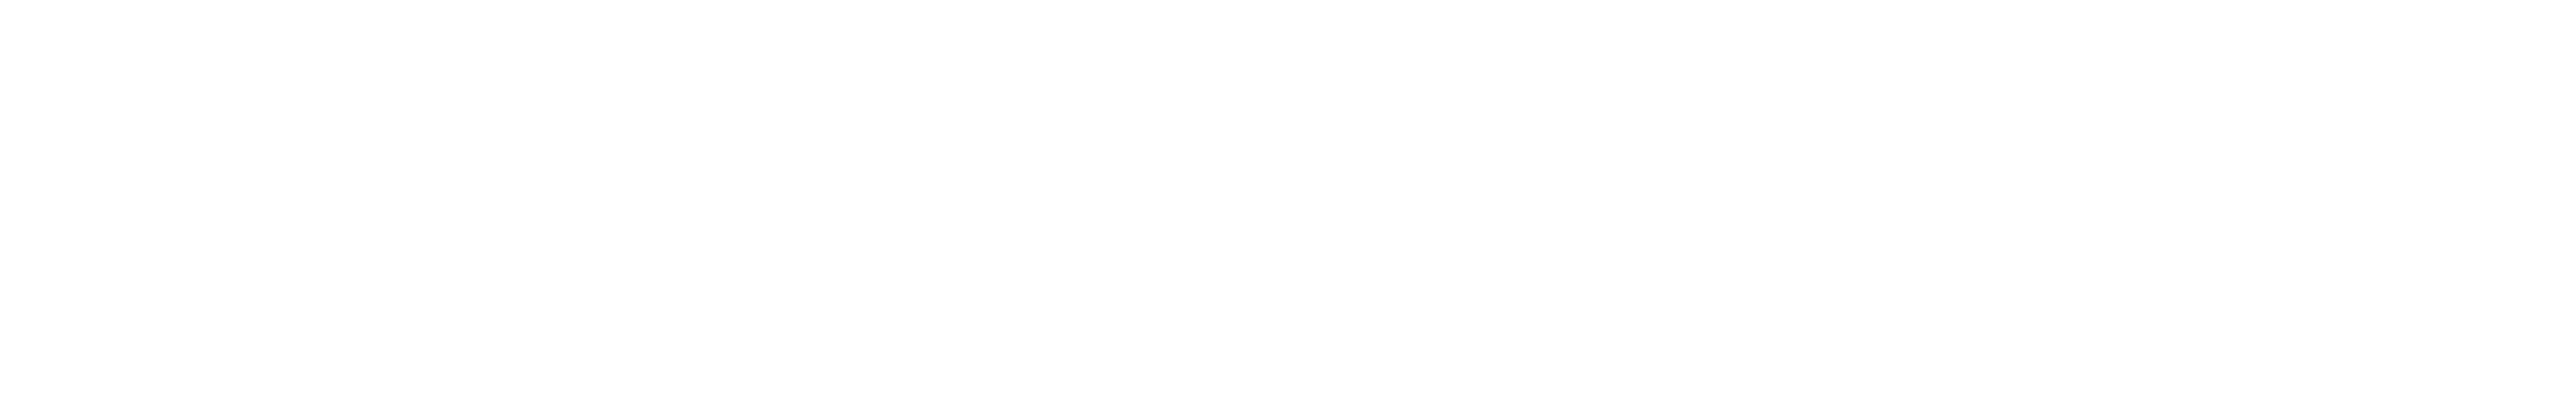 identity:digilent-logo-white-3000.png